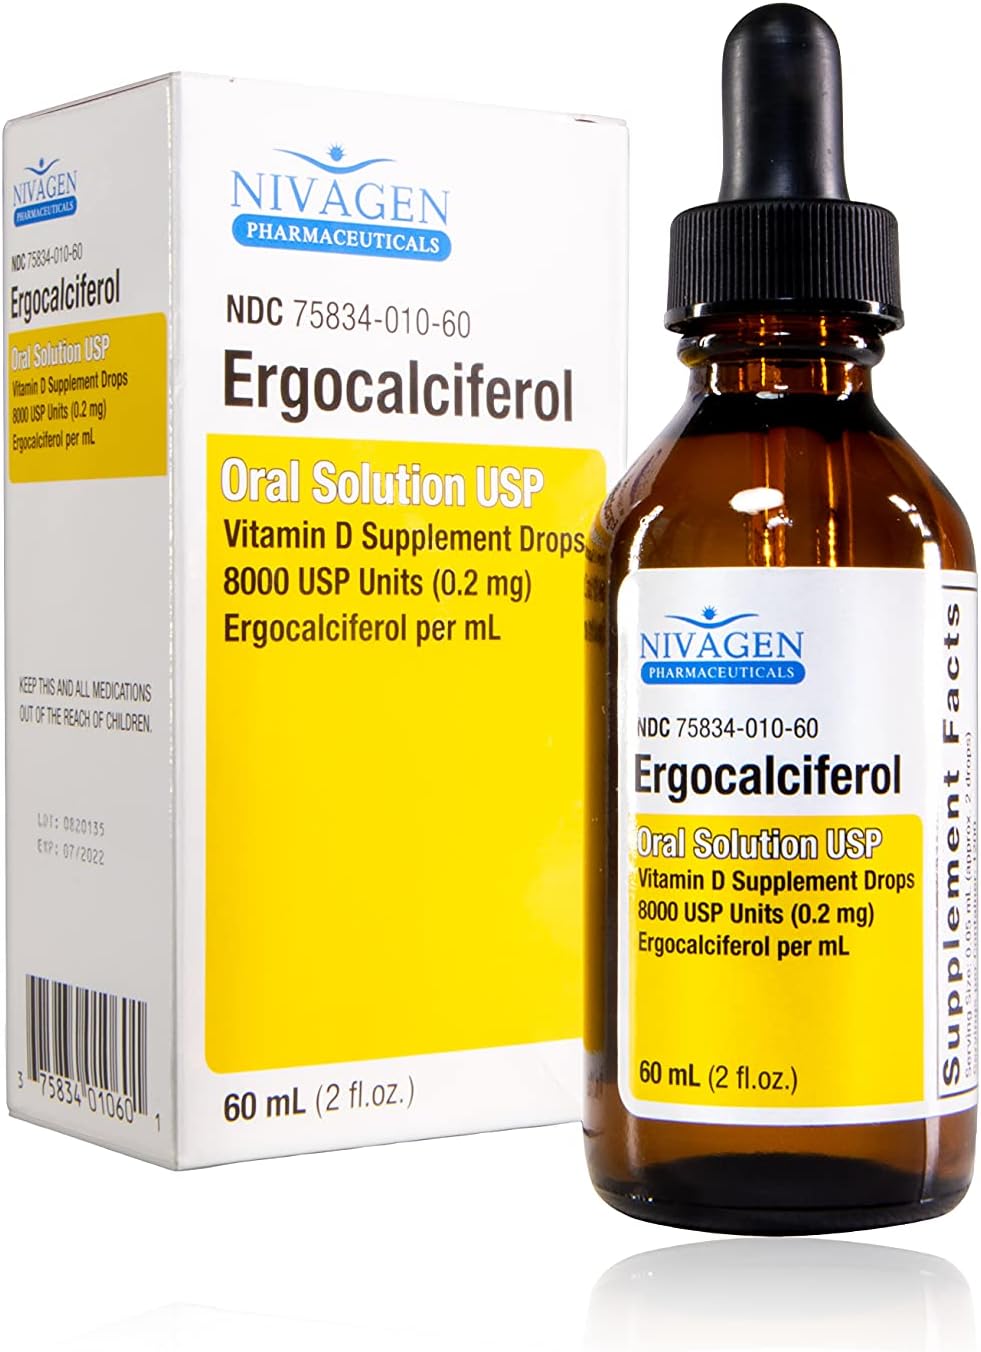 Vitamin D2 Liquid Drops as Ergocalciferol, Faster Absorption, 400iu Vitamin D2 8,000 USP, 1,200 Servings, 60ml - 2 fl.oz